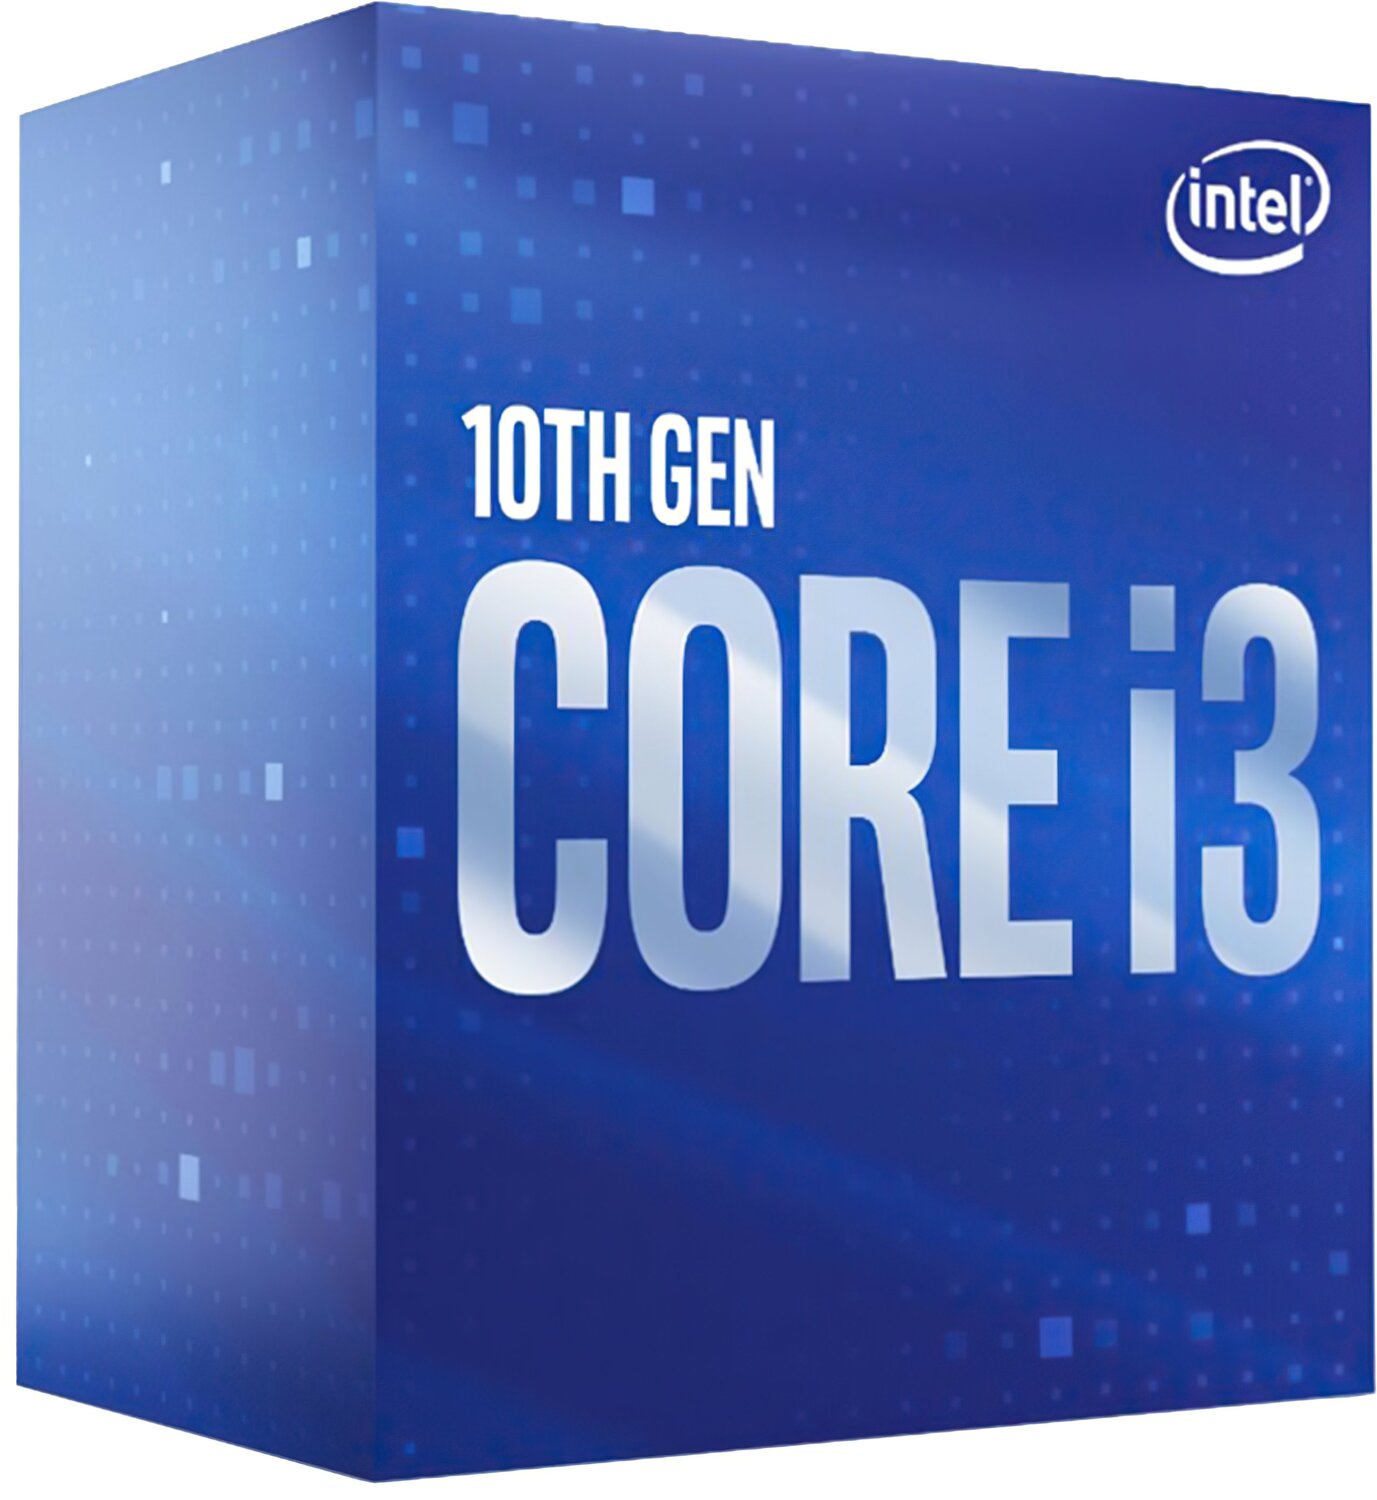 Процесор Intel Core i3-10100 4/8 3.6GHz 6M LGA1200 65W box (BX8070110100)фото